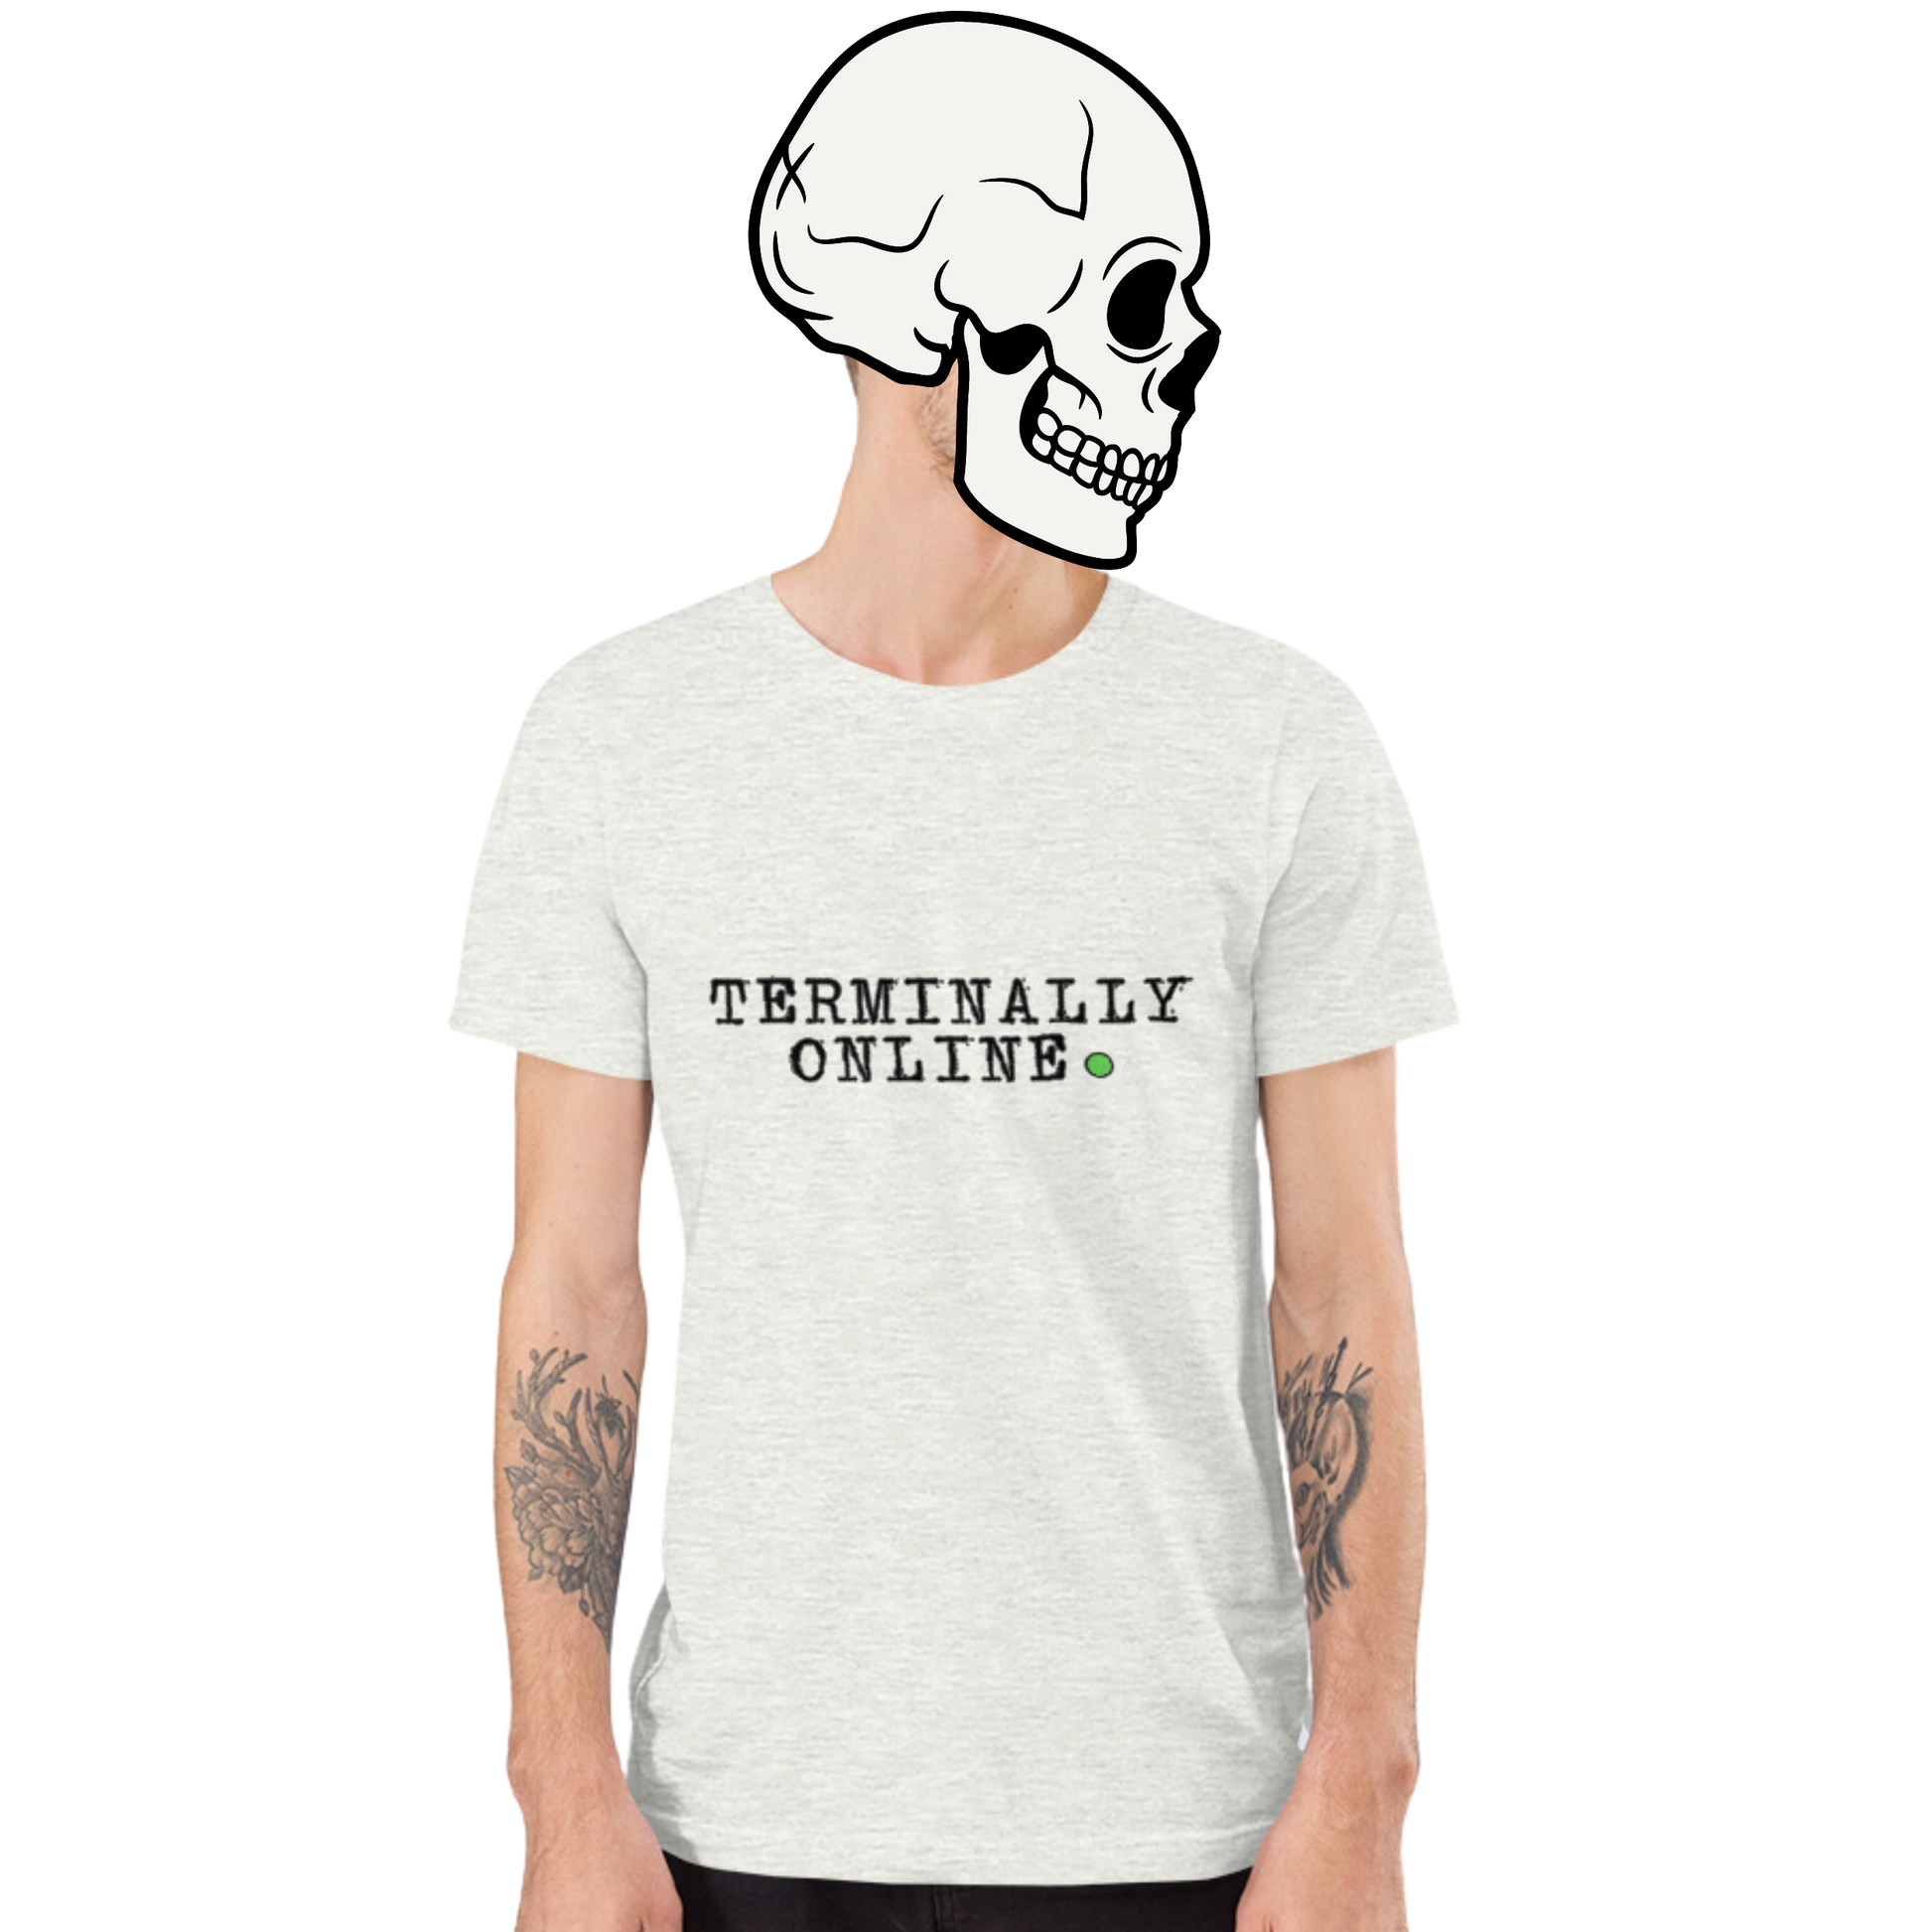 terminally online t-shirt model in white - gaslit apparel